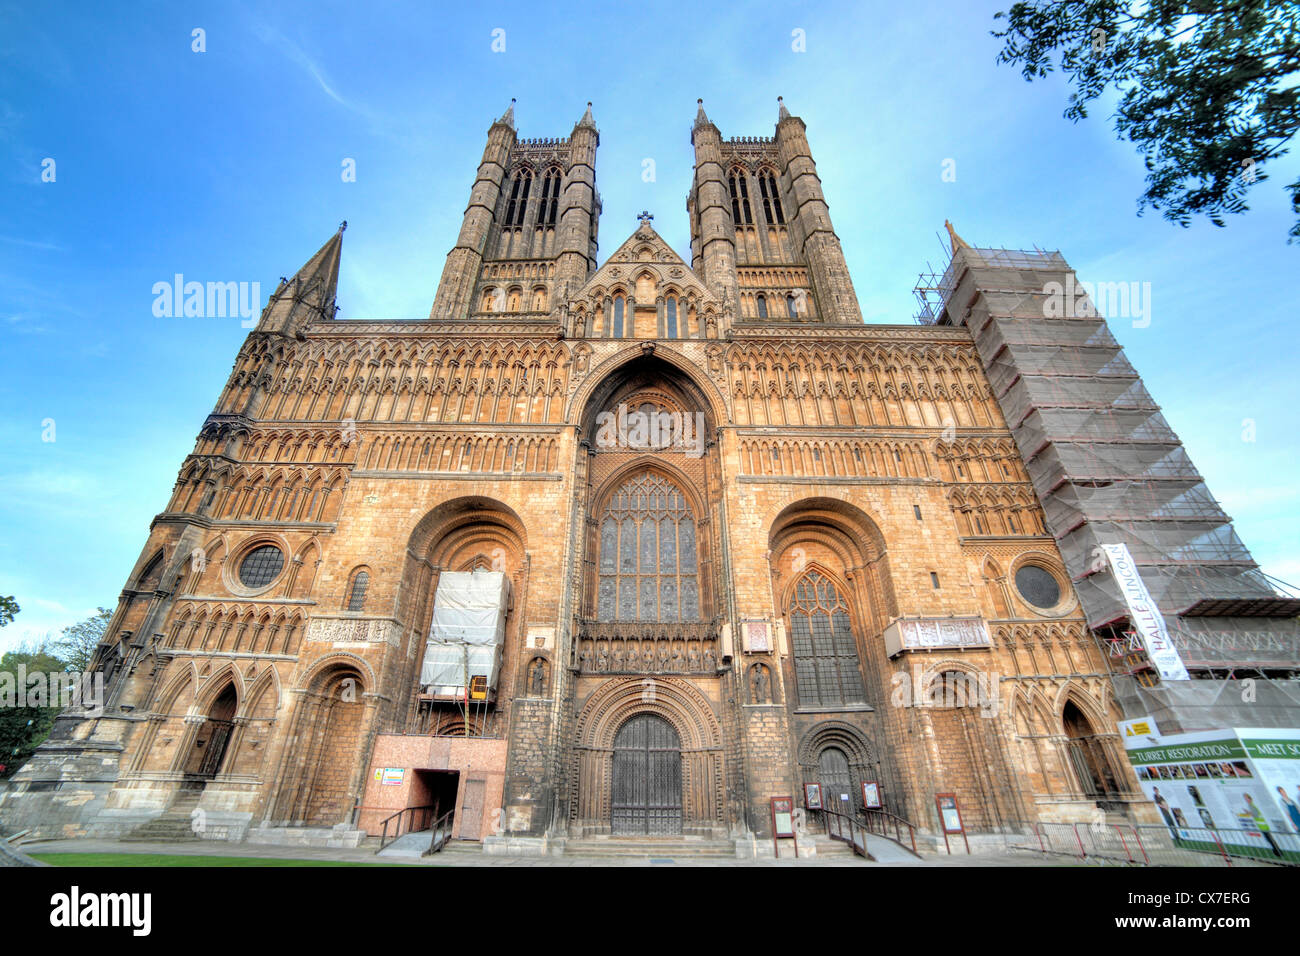 Westfassade der Kathedrale von Lincoln, Lincoln, Lincolnshire, England, UK Stockfoto